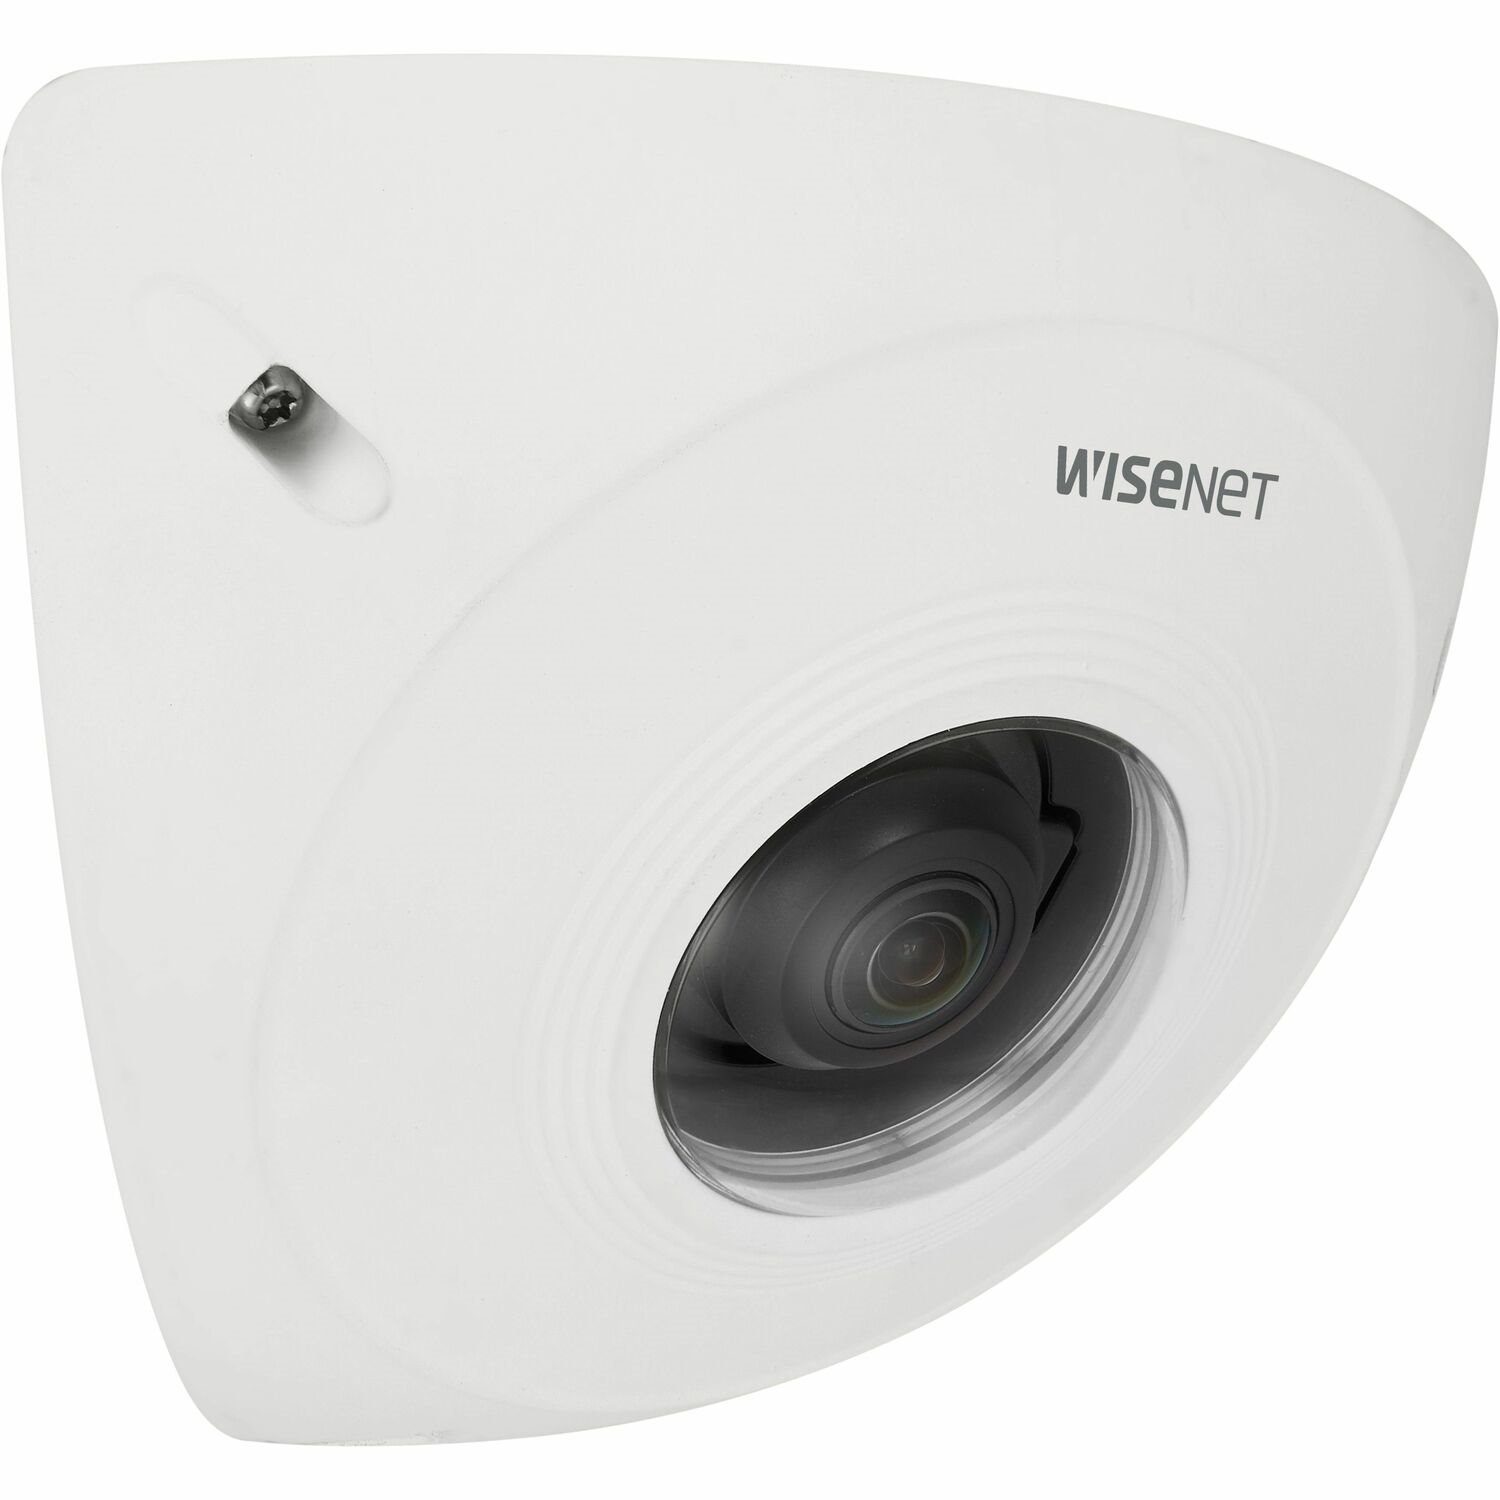 Wisenet TNV-8011C 5 Megapixel Network Camera - Color - White - TAA Compliant